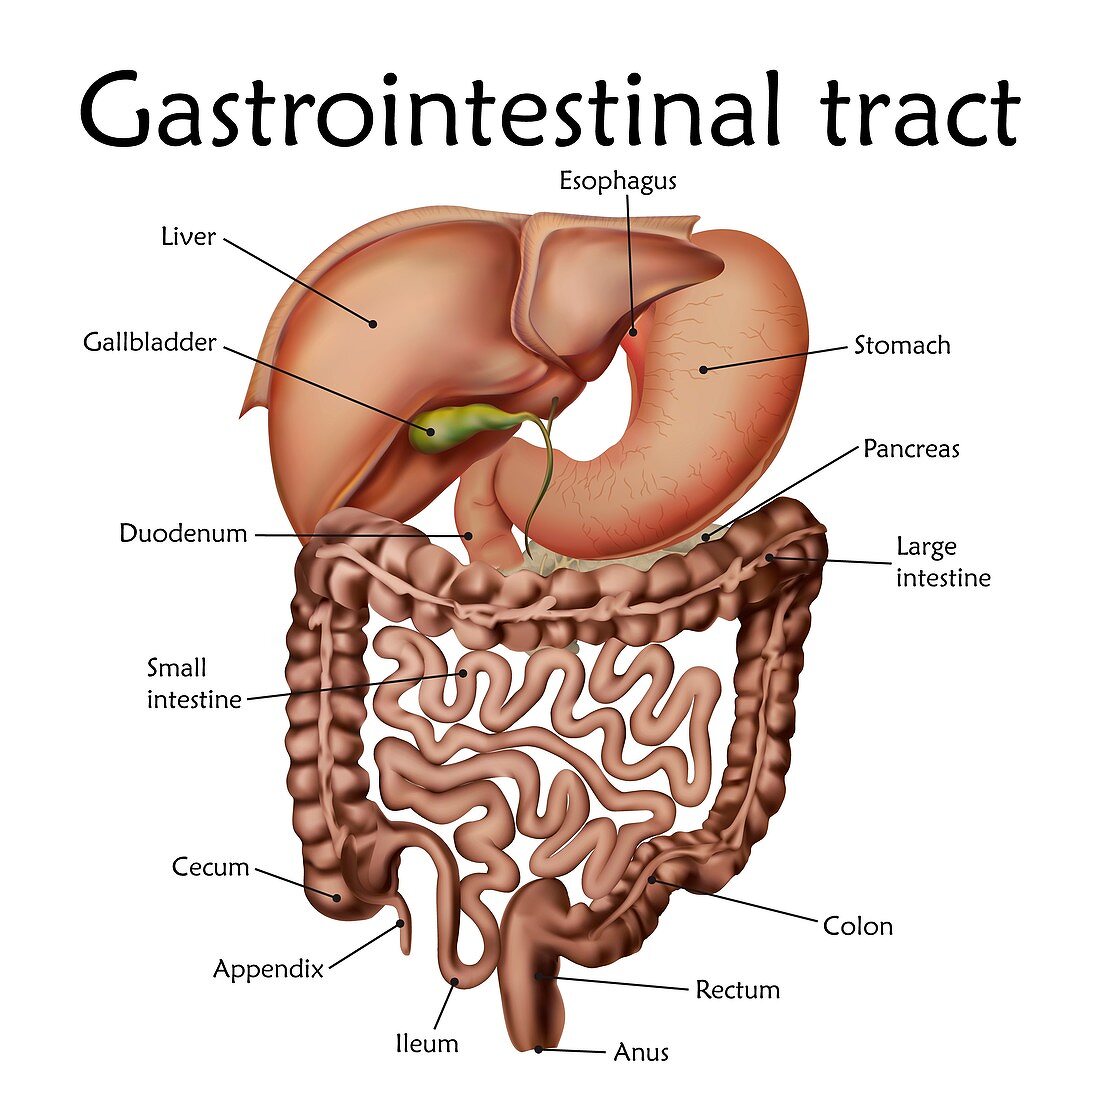 Gastrointestinal tract, illustration